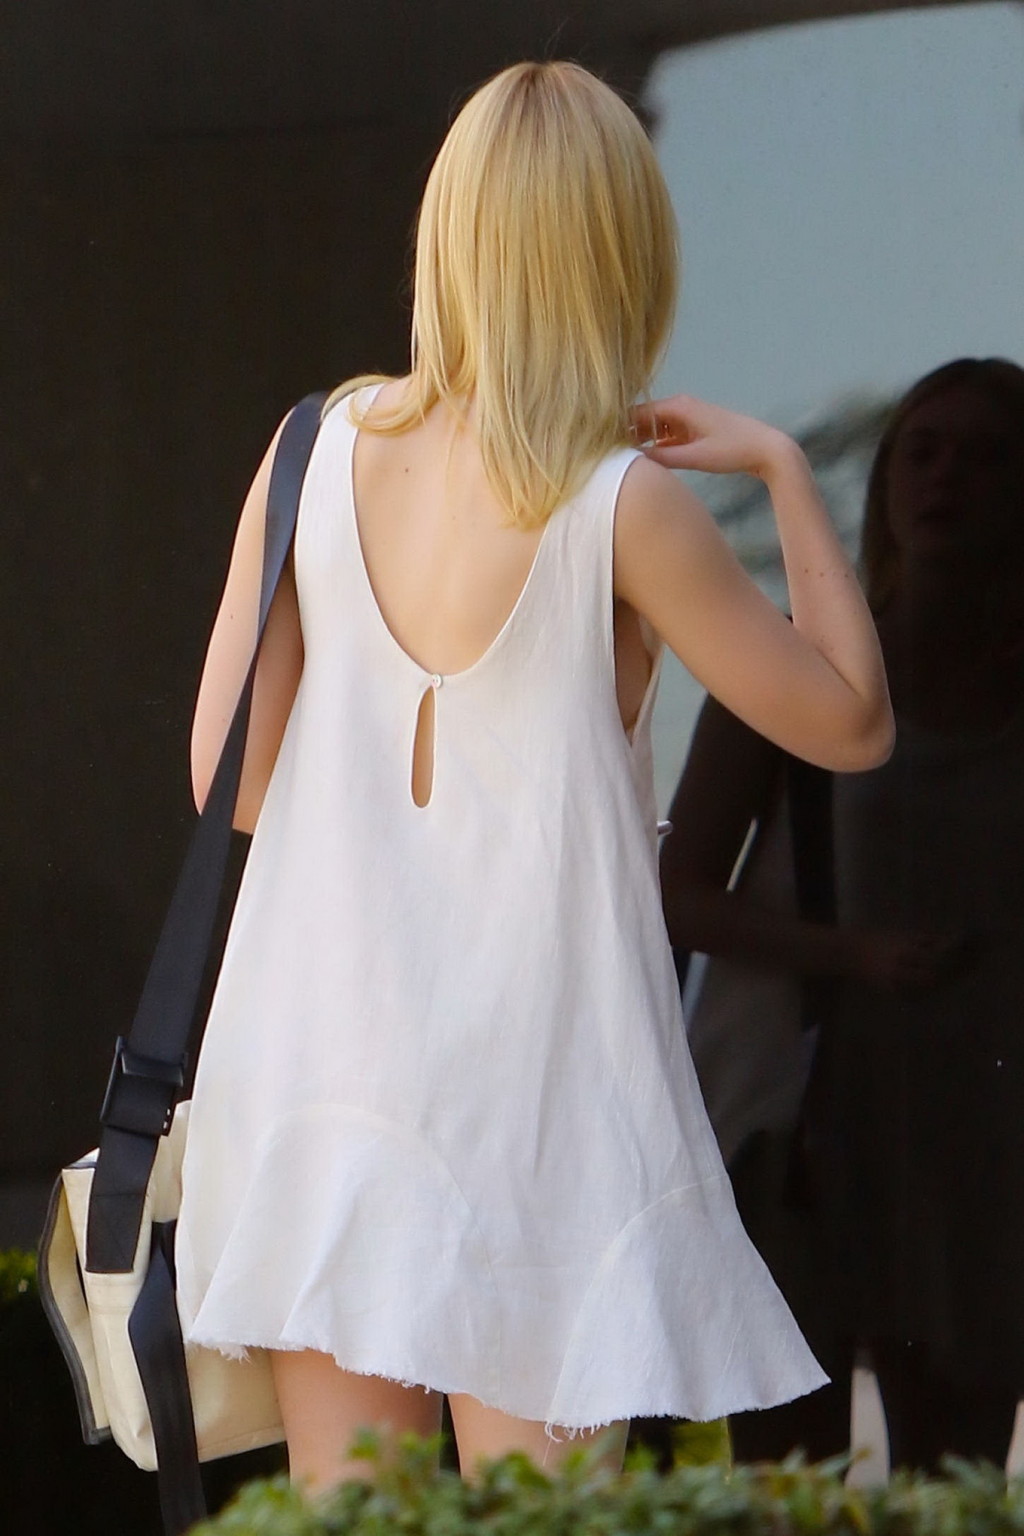 Elle Fanning shows off her bare boob in white mini dress #75151633